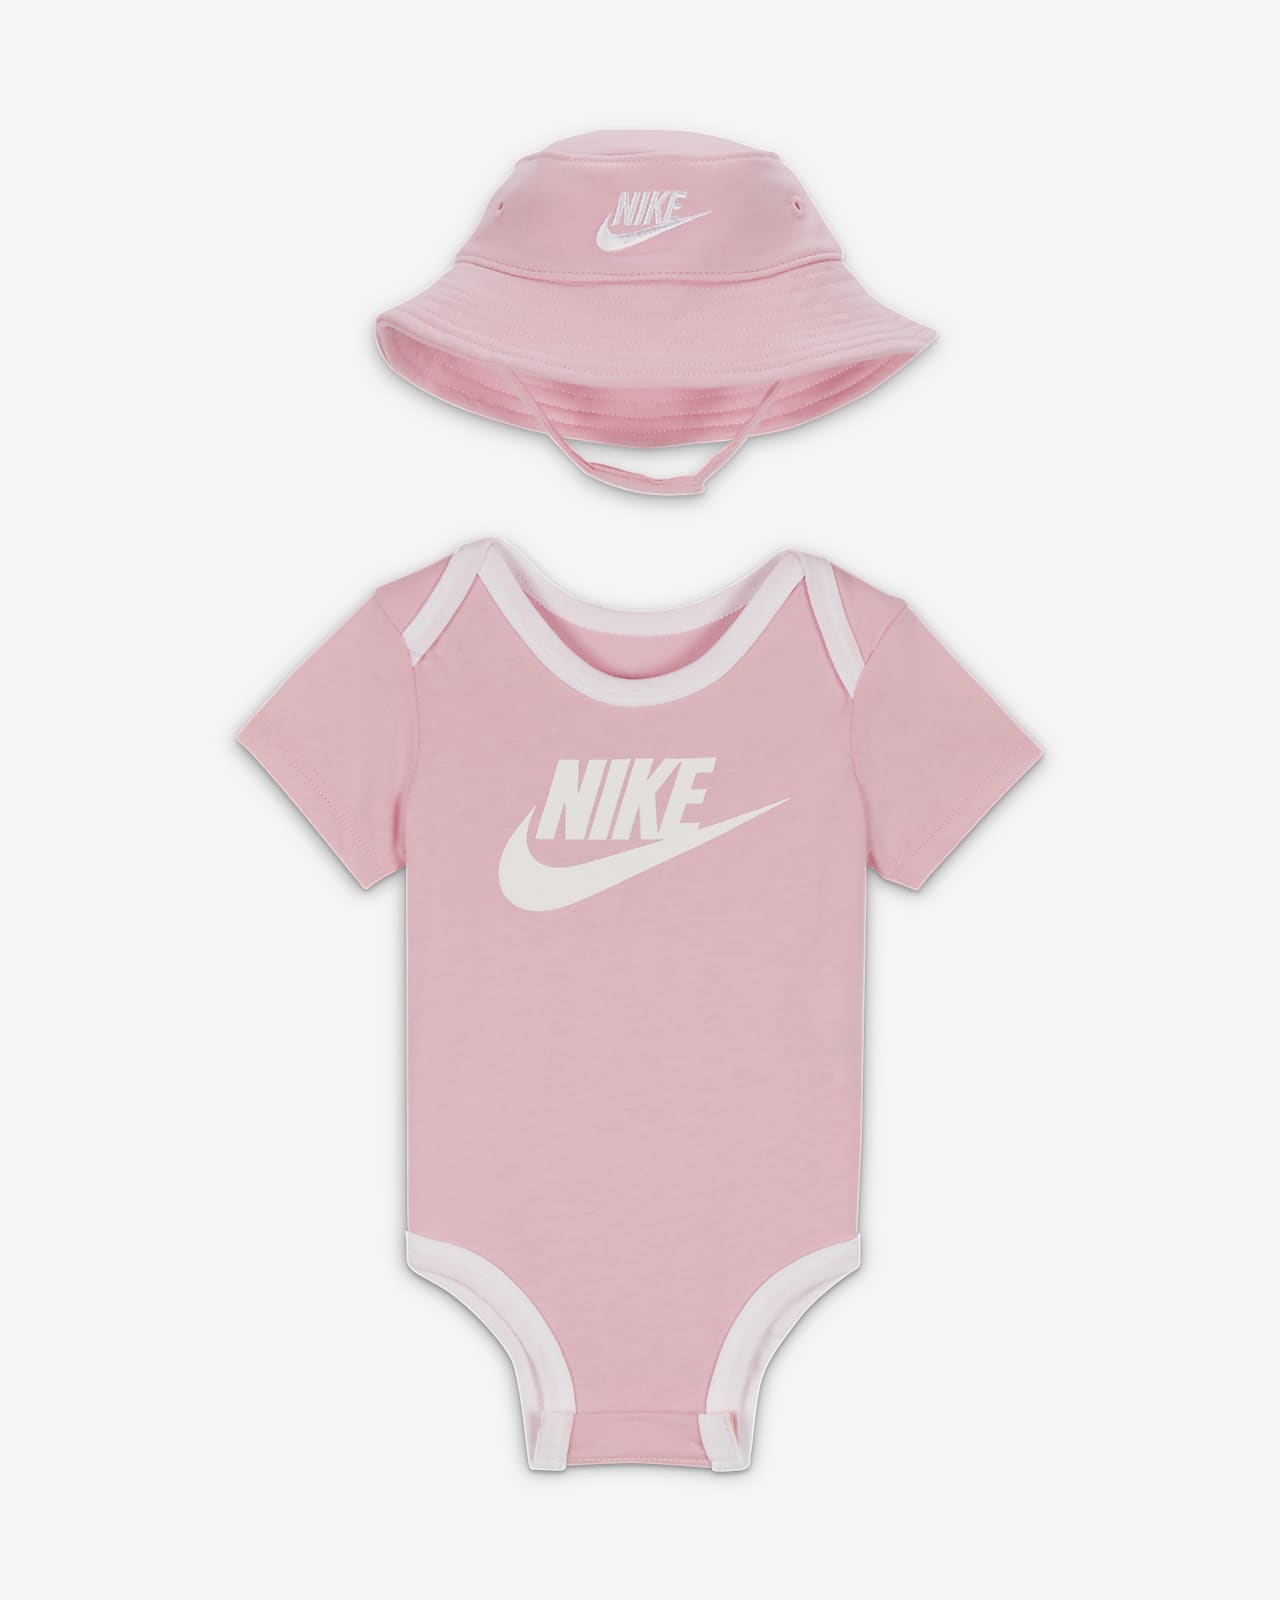 Nike ensemble bébé avec bob et body assorti Pink